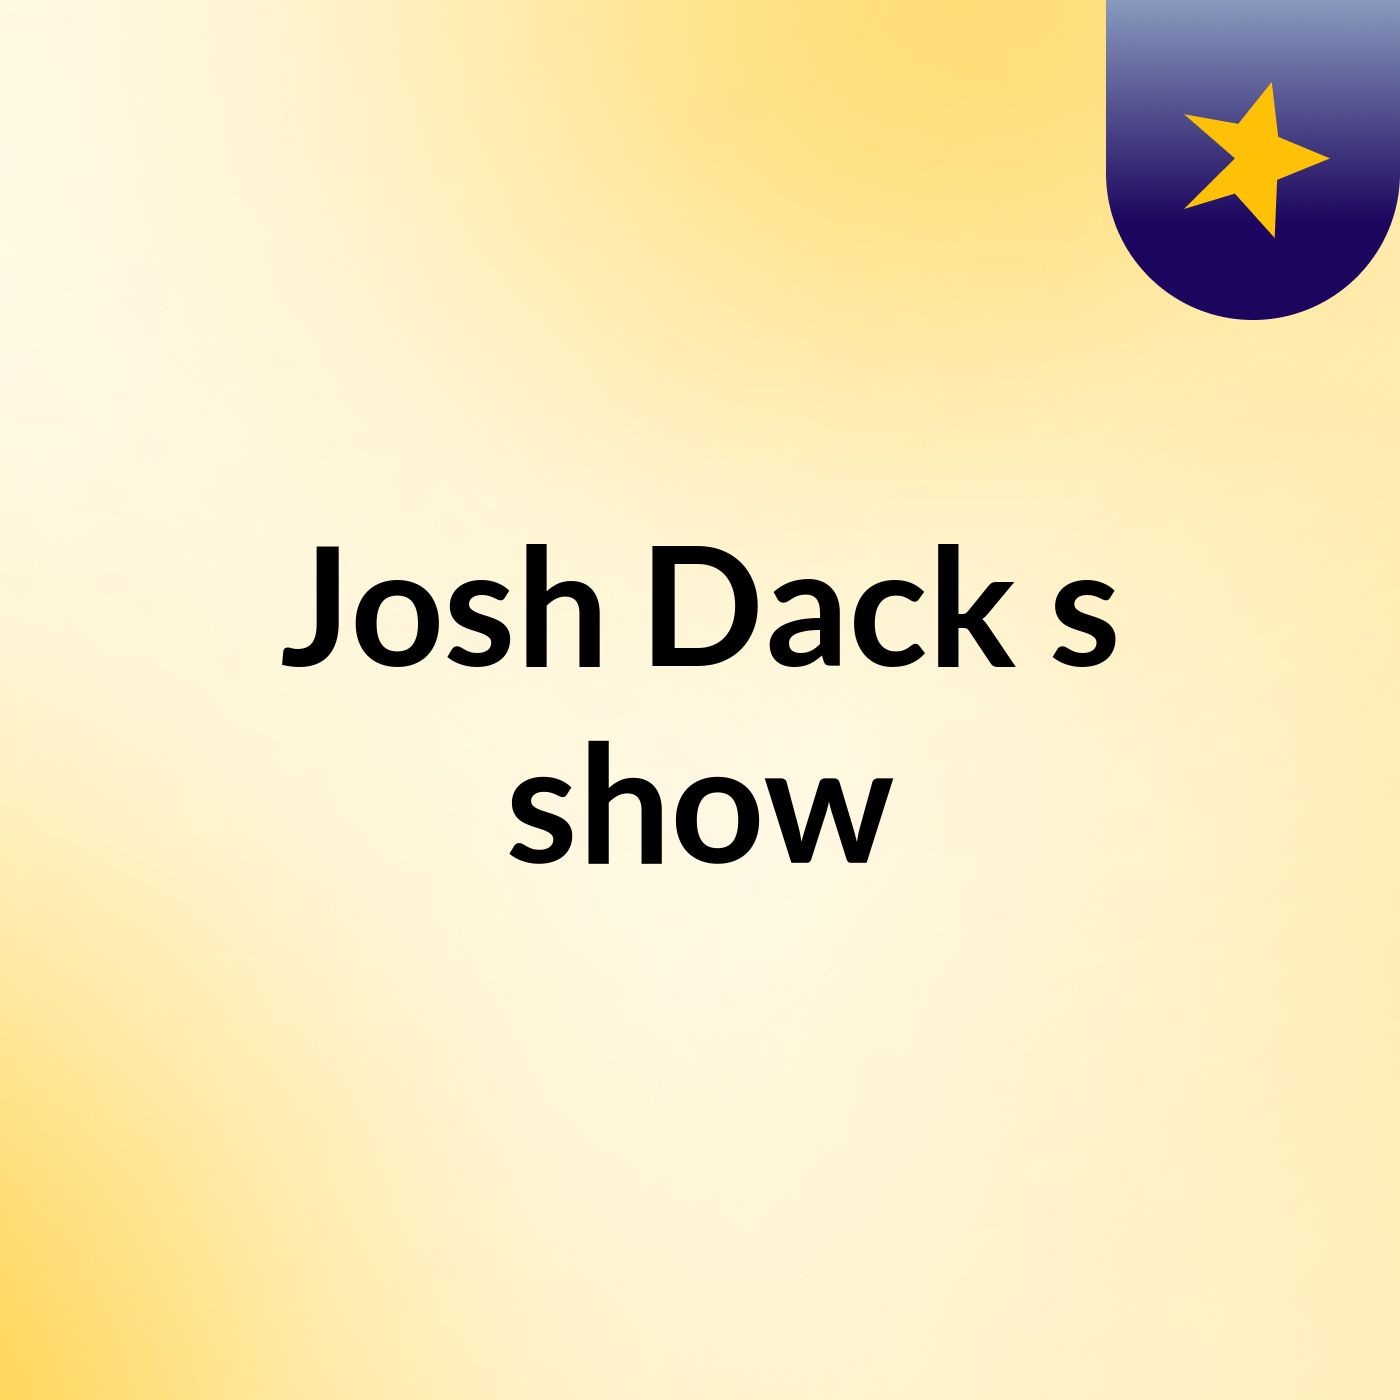 Josh Dack's show